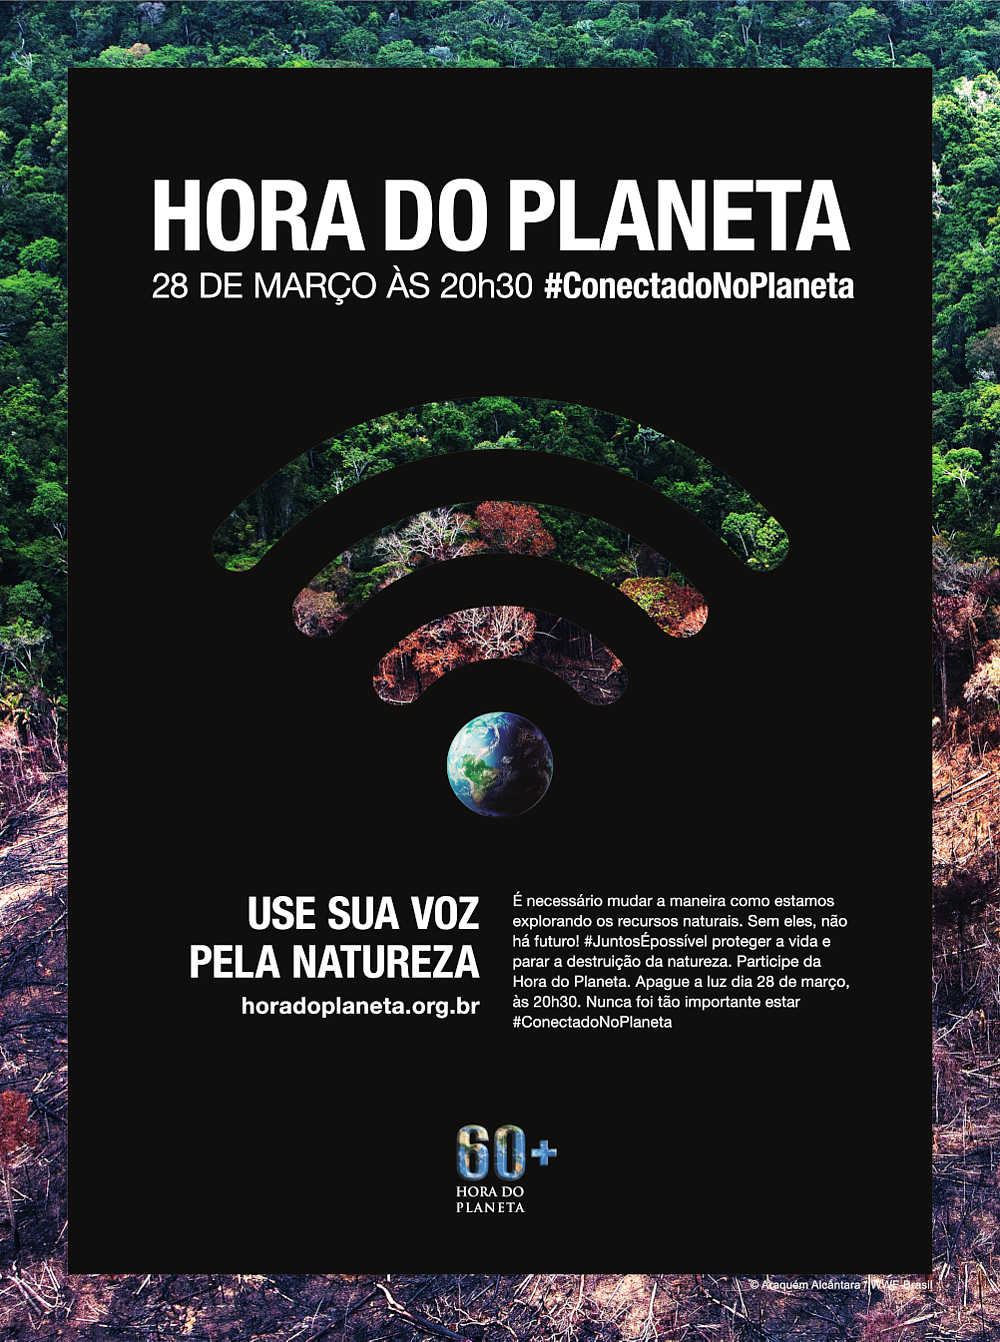 © WWF-Brasil